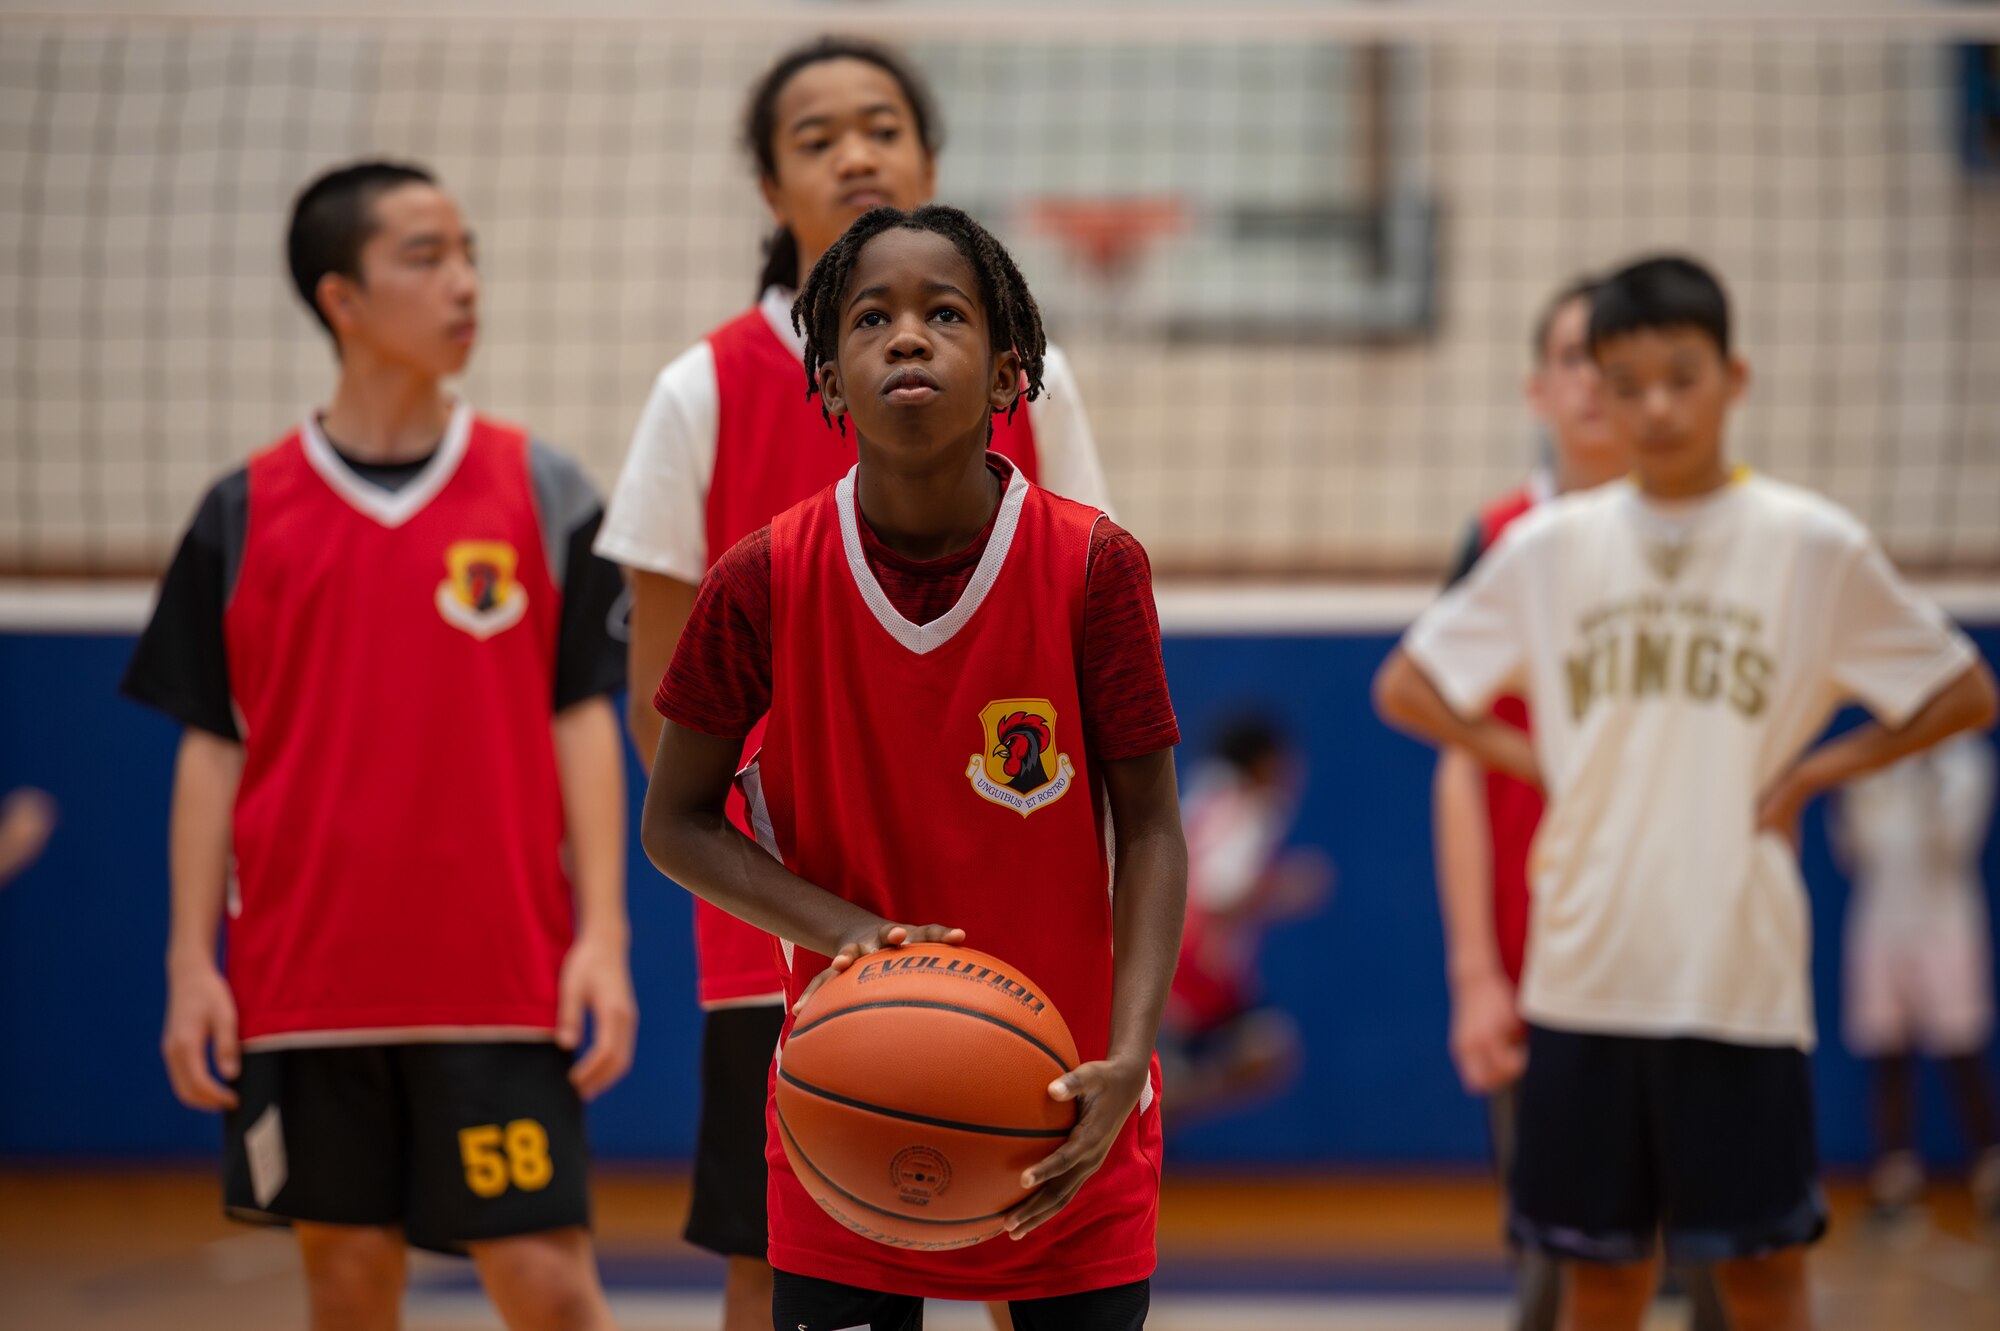 Child prepares to shoot a basketball